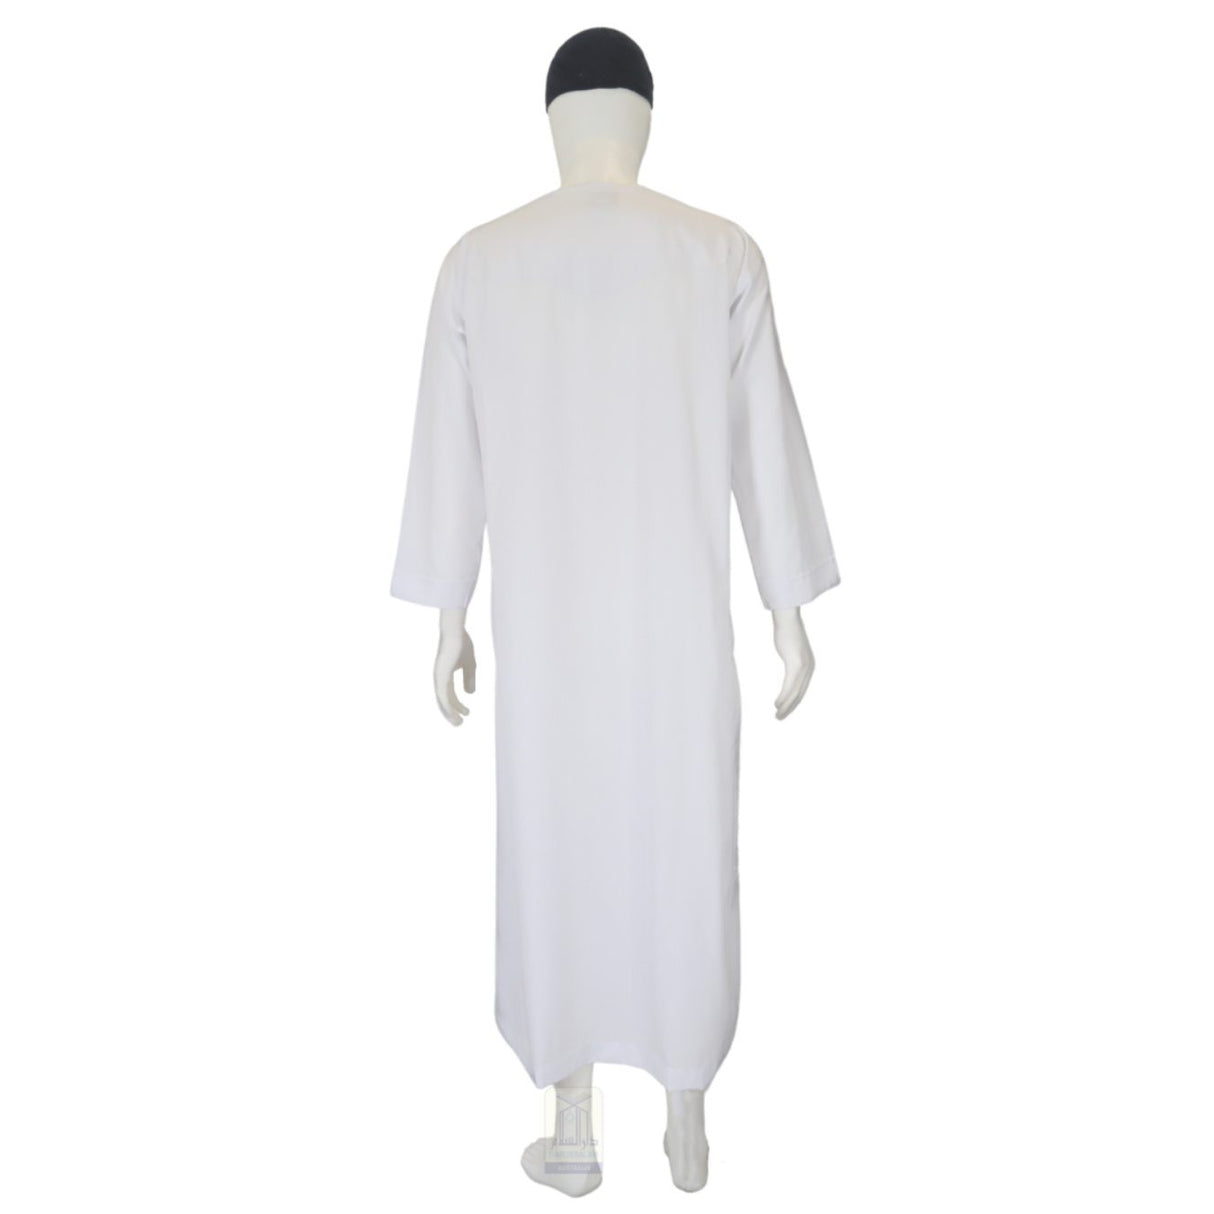 Ikaf Omani Thobe for Men - Slim Size 24